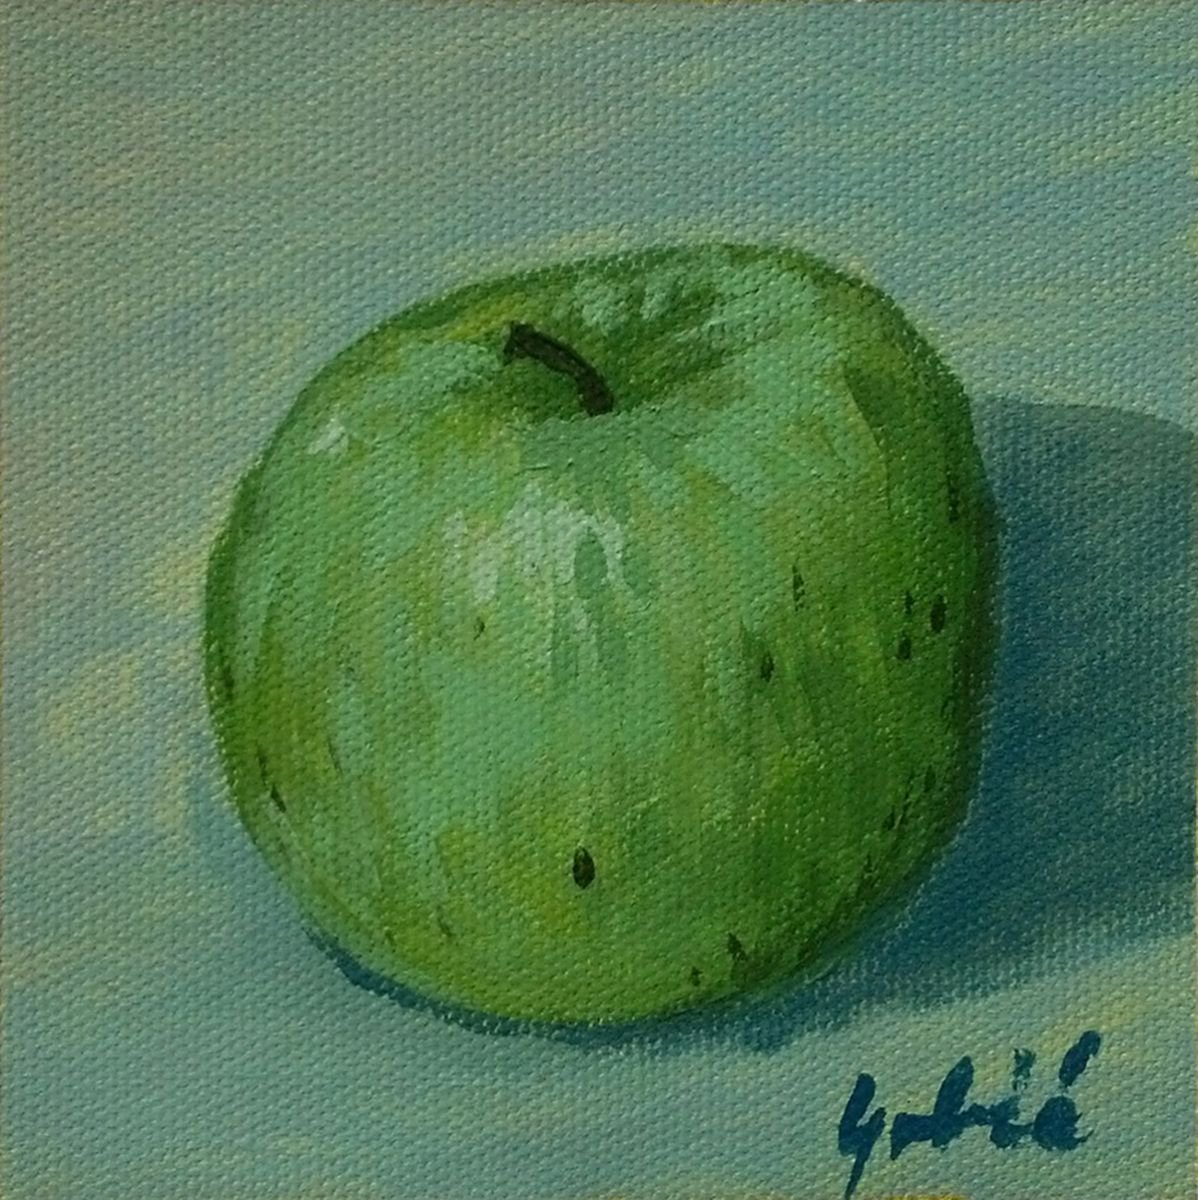 Green apple by Alen Grbic